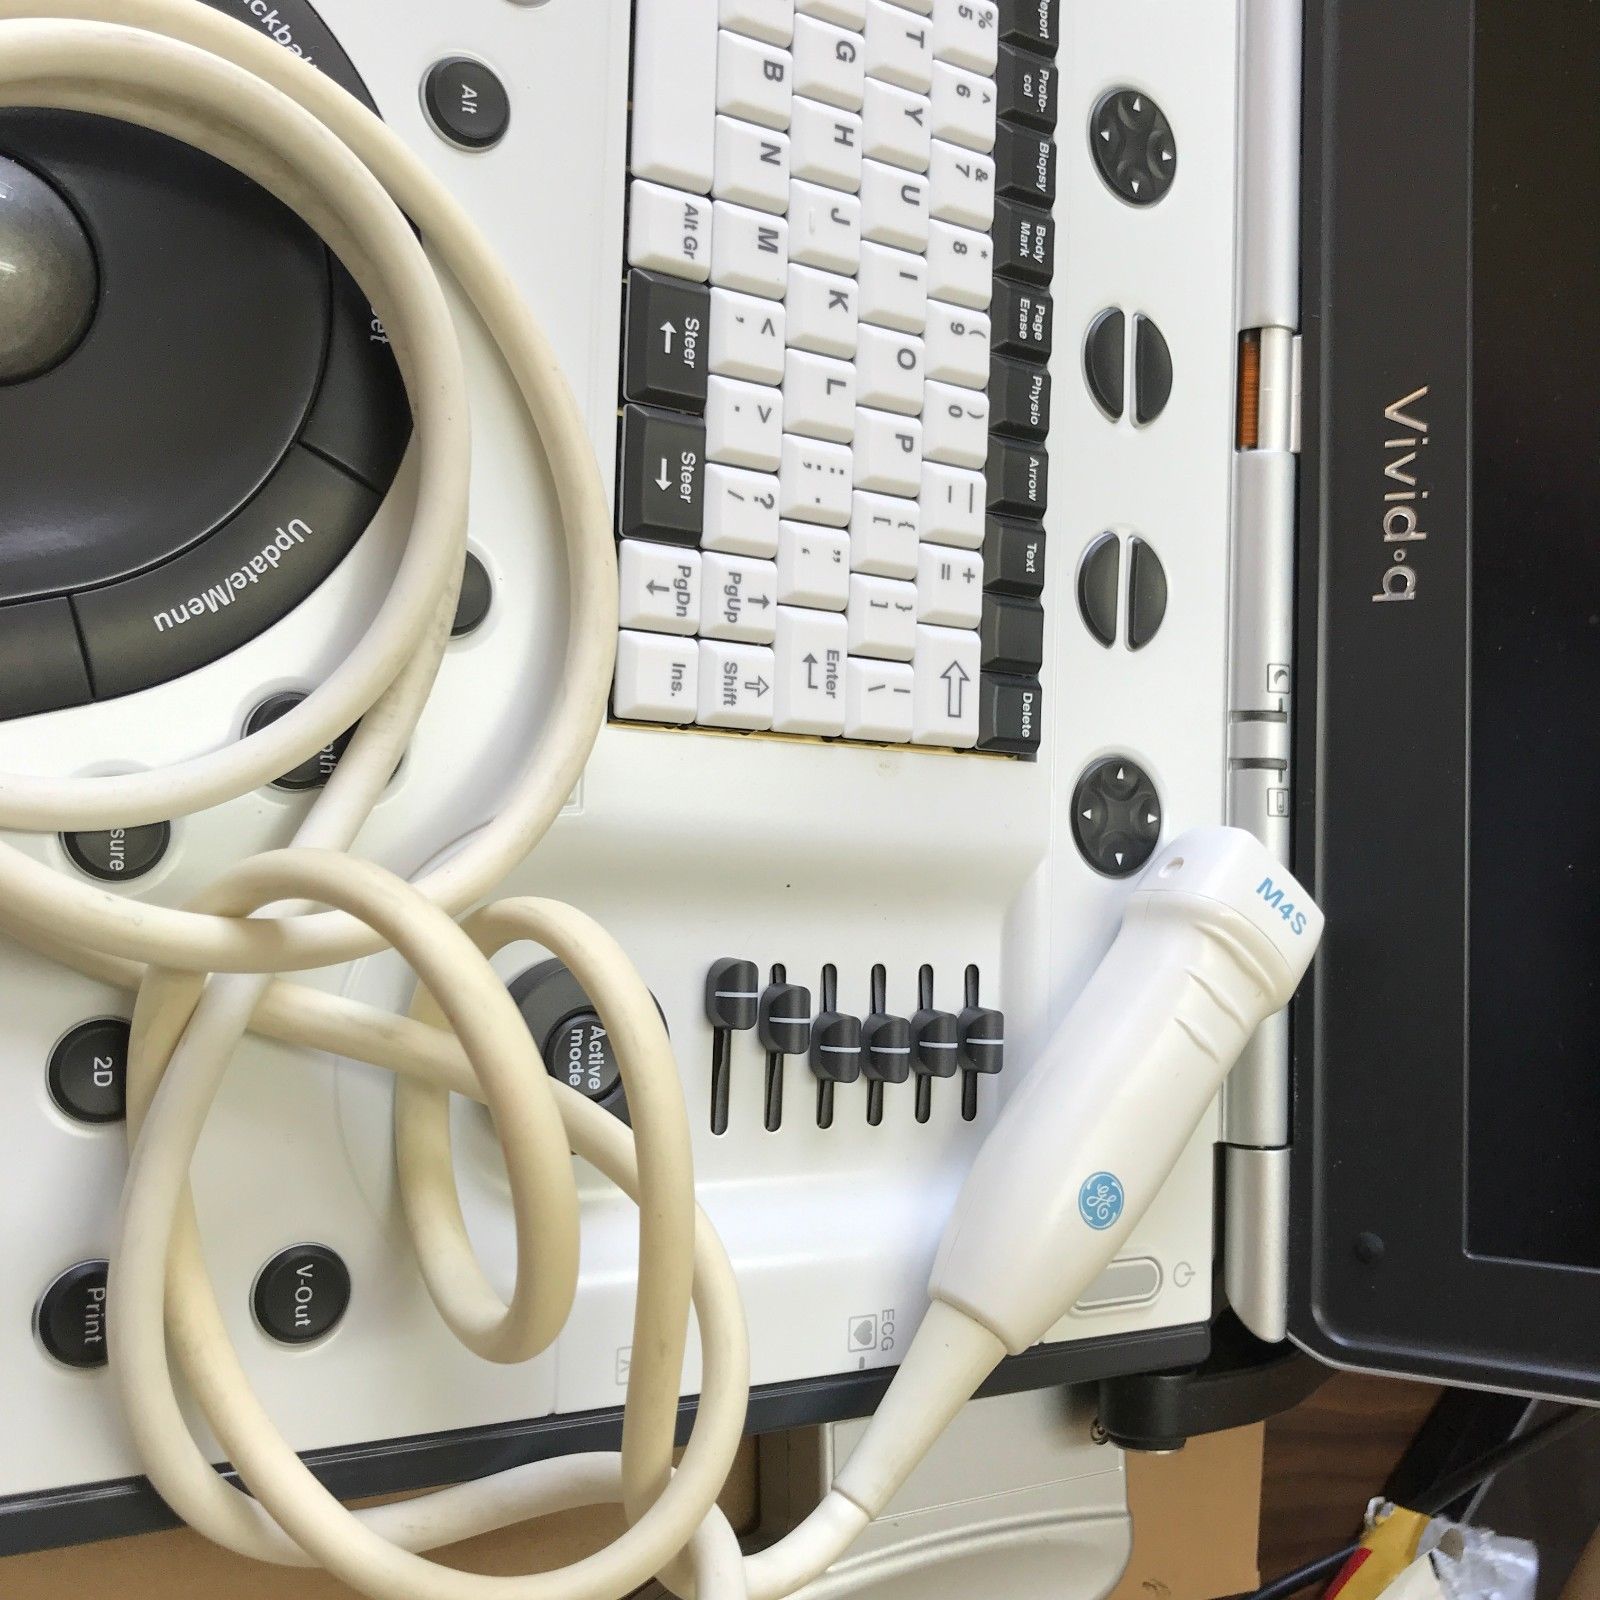 Vivid Q Ultrasound System DIAGNOSTIC ULTRASOUND MACHINES FOR SALE